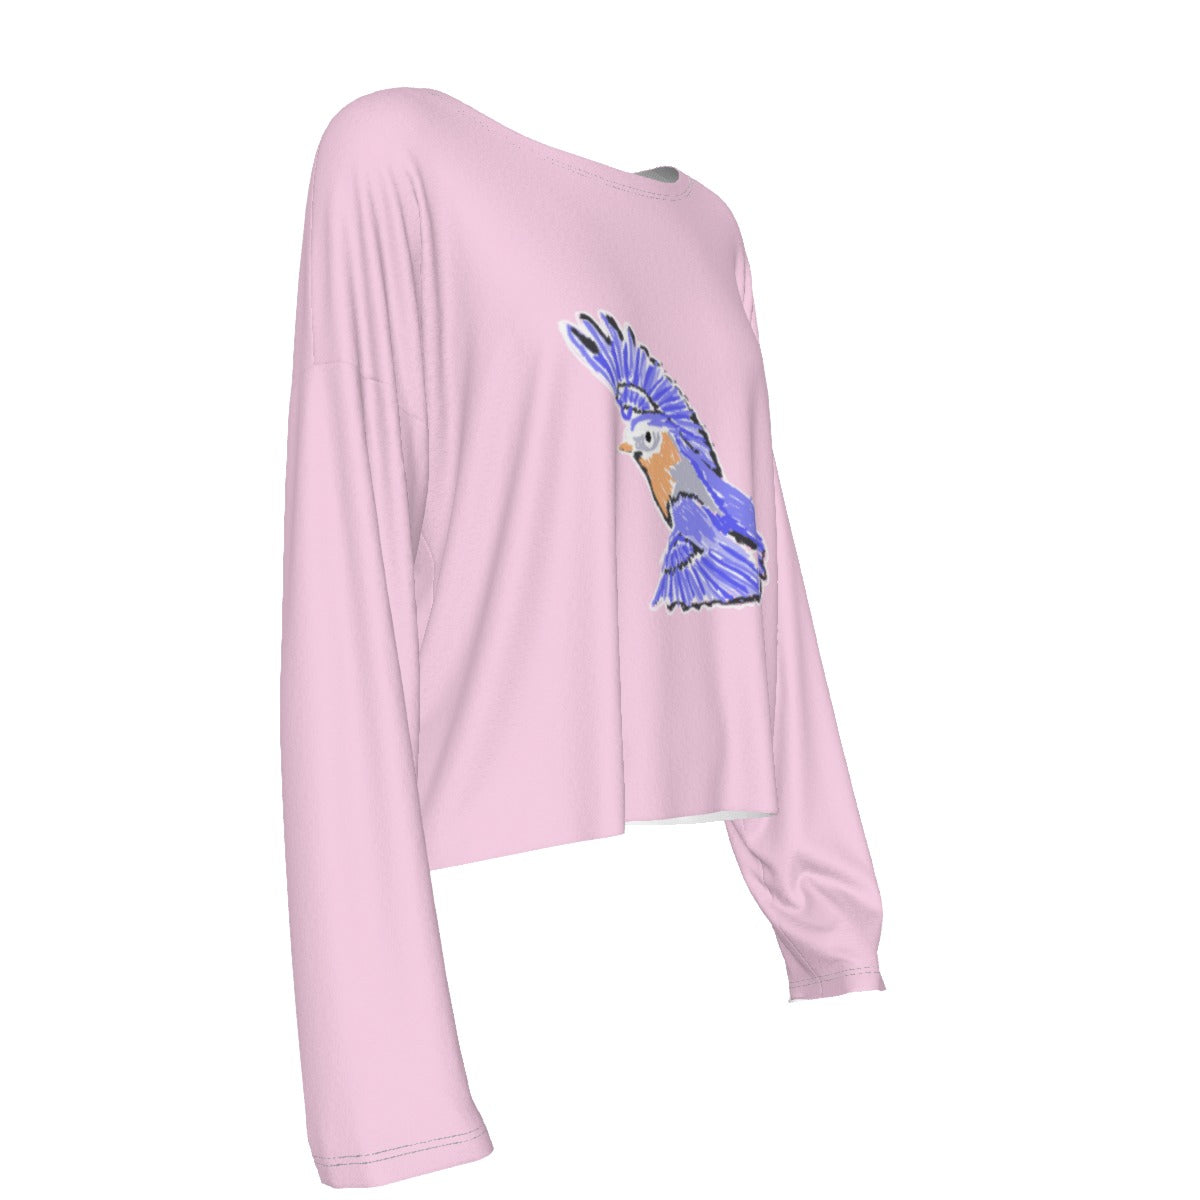 Women's Bluebird Thin Sweatshirt